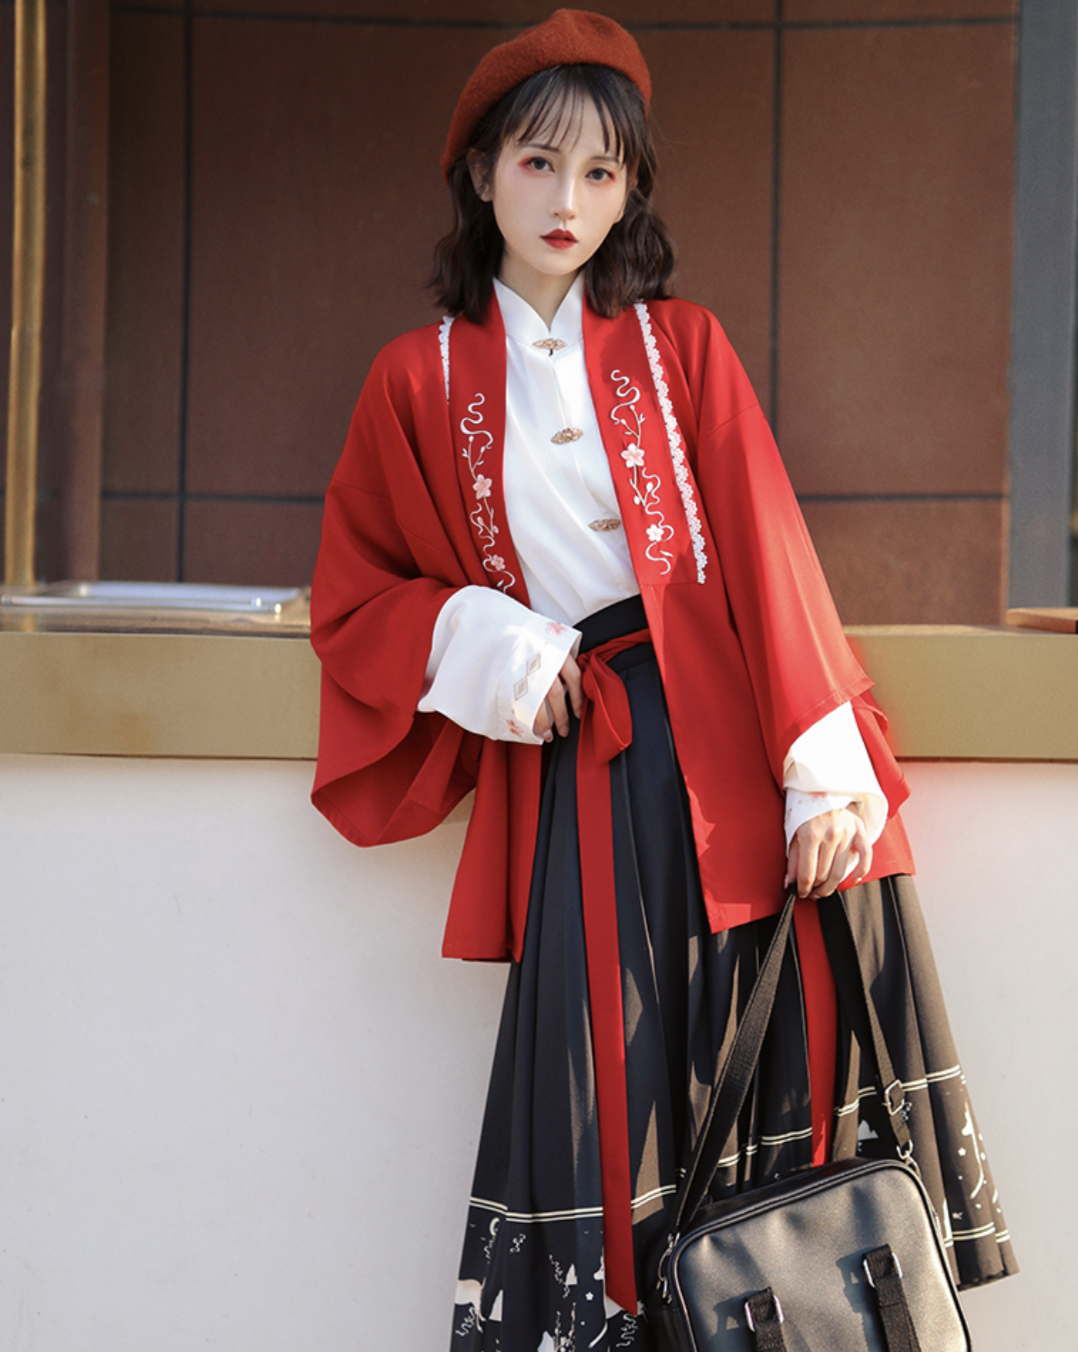 Modern Chinese Hanfu Outfits & Dresses | Tradition meets Modern | Hanfu ...